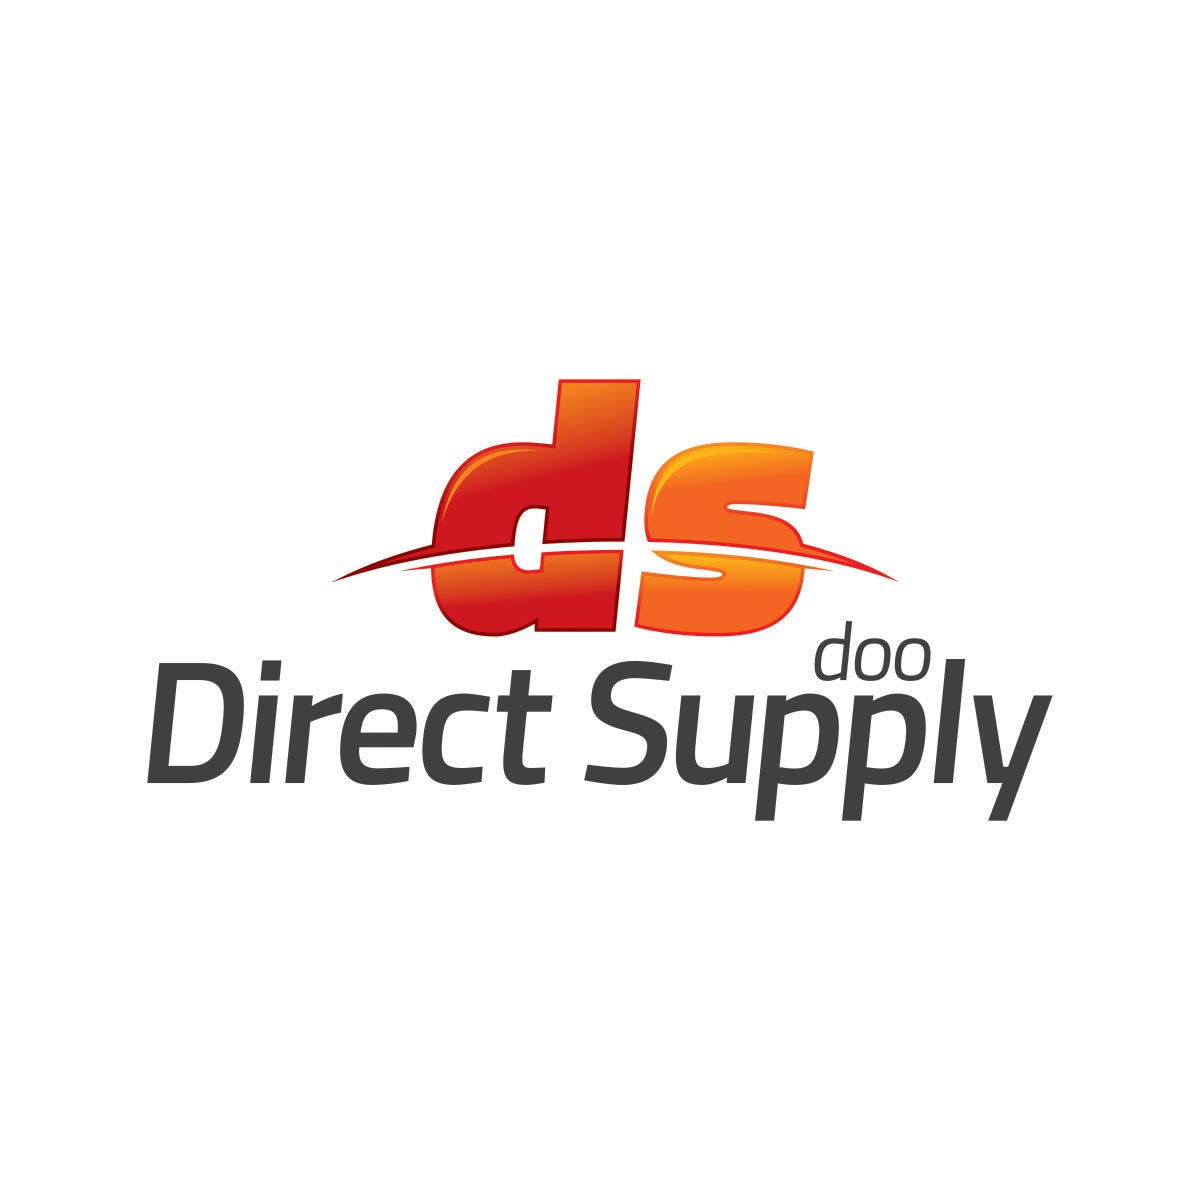 Direct Supply logo design